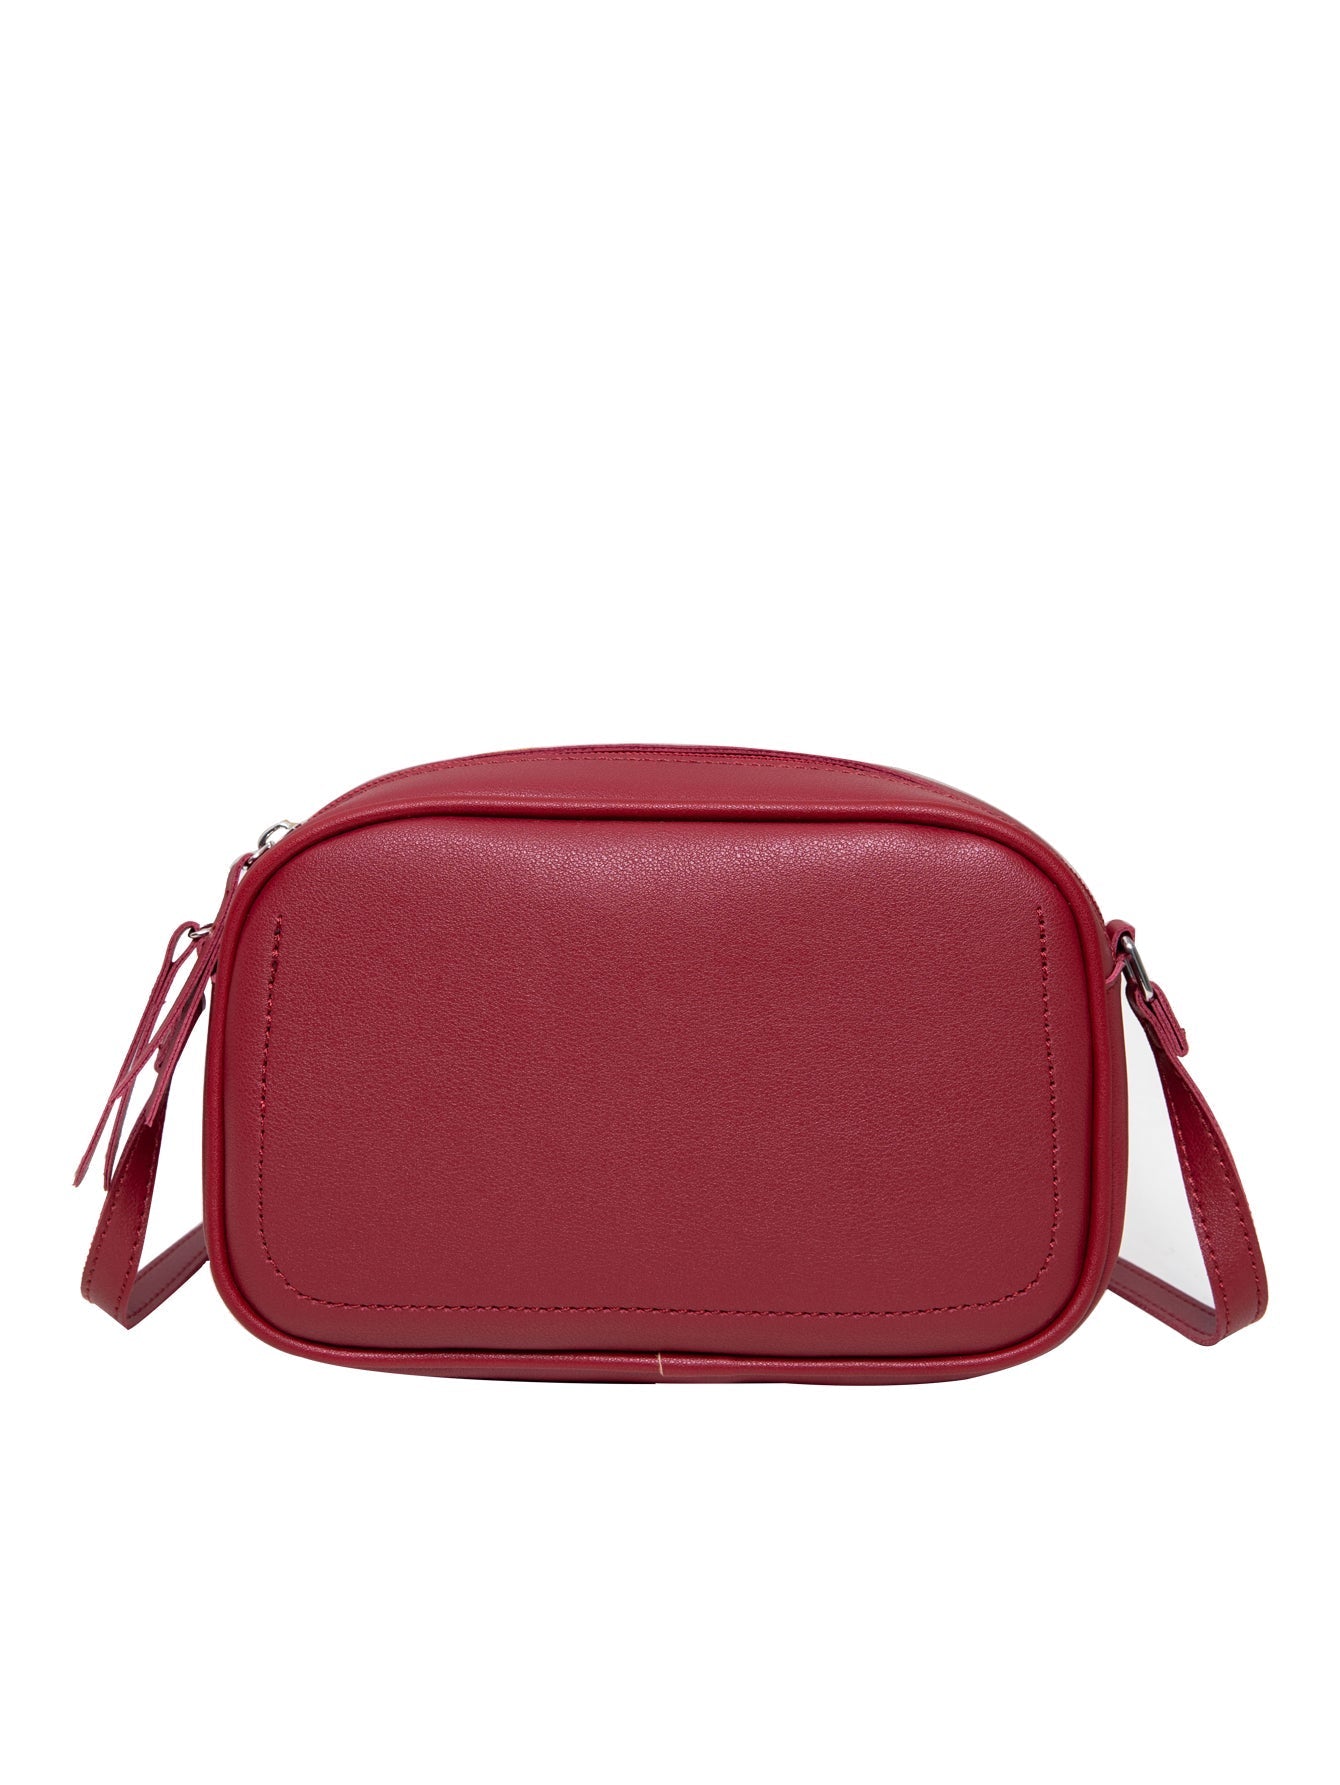 Women Leather Handbags Clutches Women Handbags Ladies Shoulder Bags Crossbody Bags Sai Feel